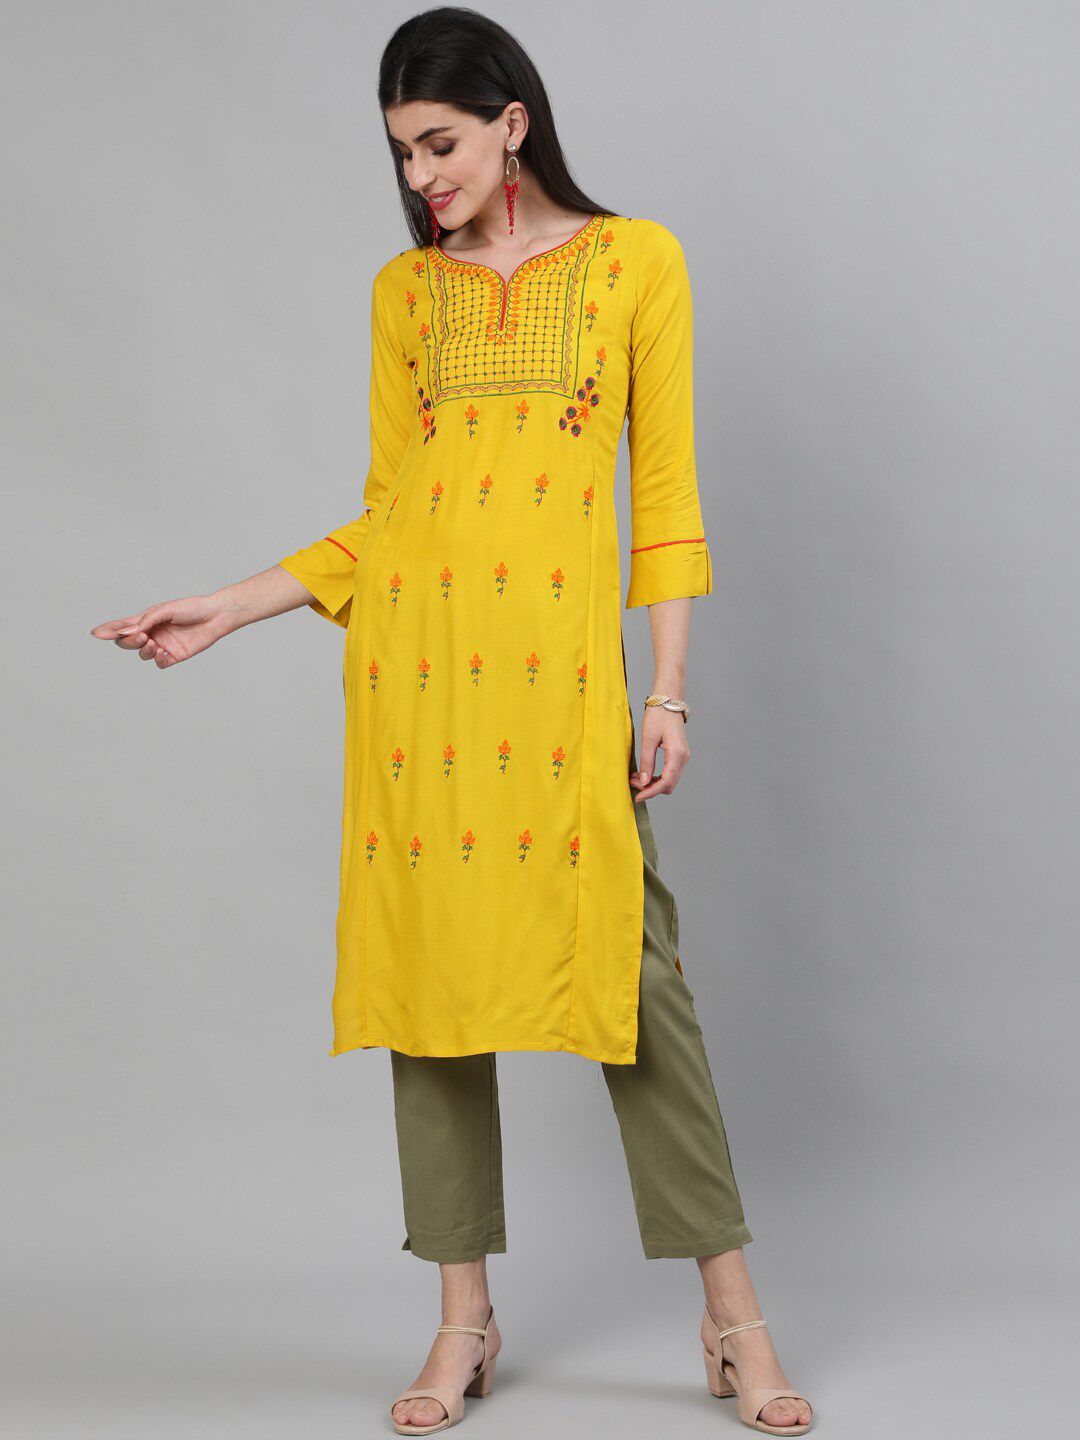 KIMAYRA Women Yellow & Green Floral Embroidered Kurta Price in India